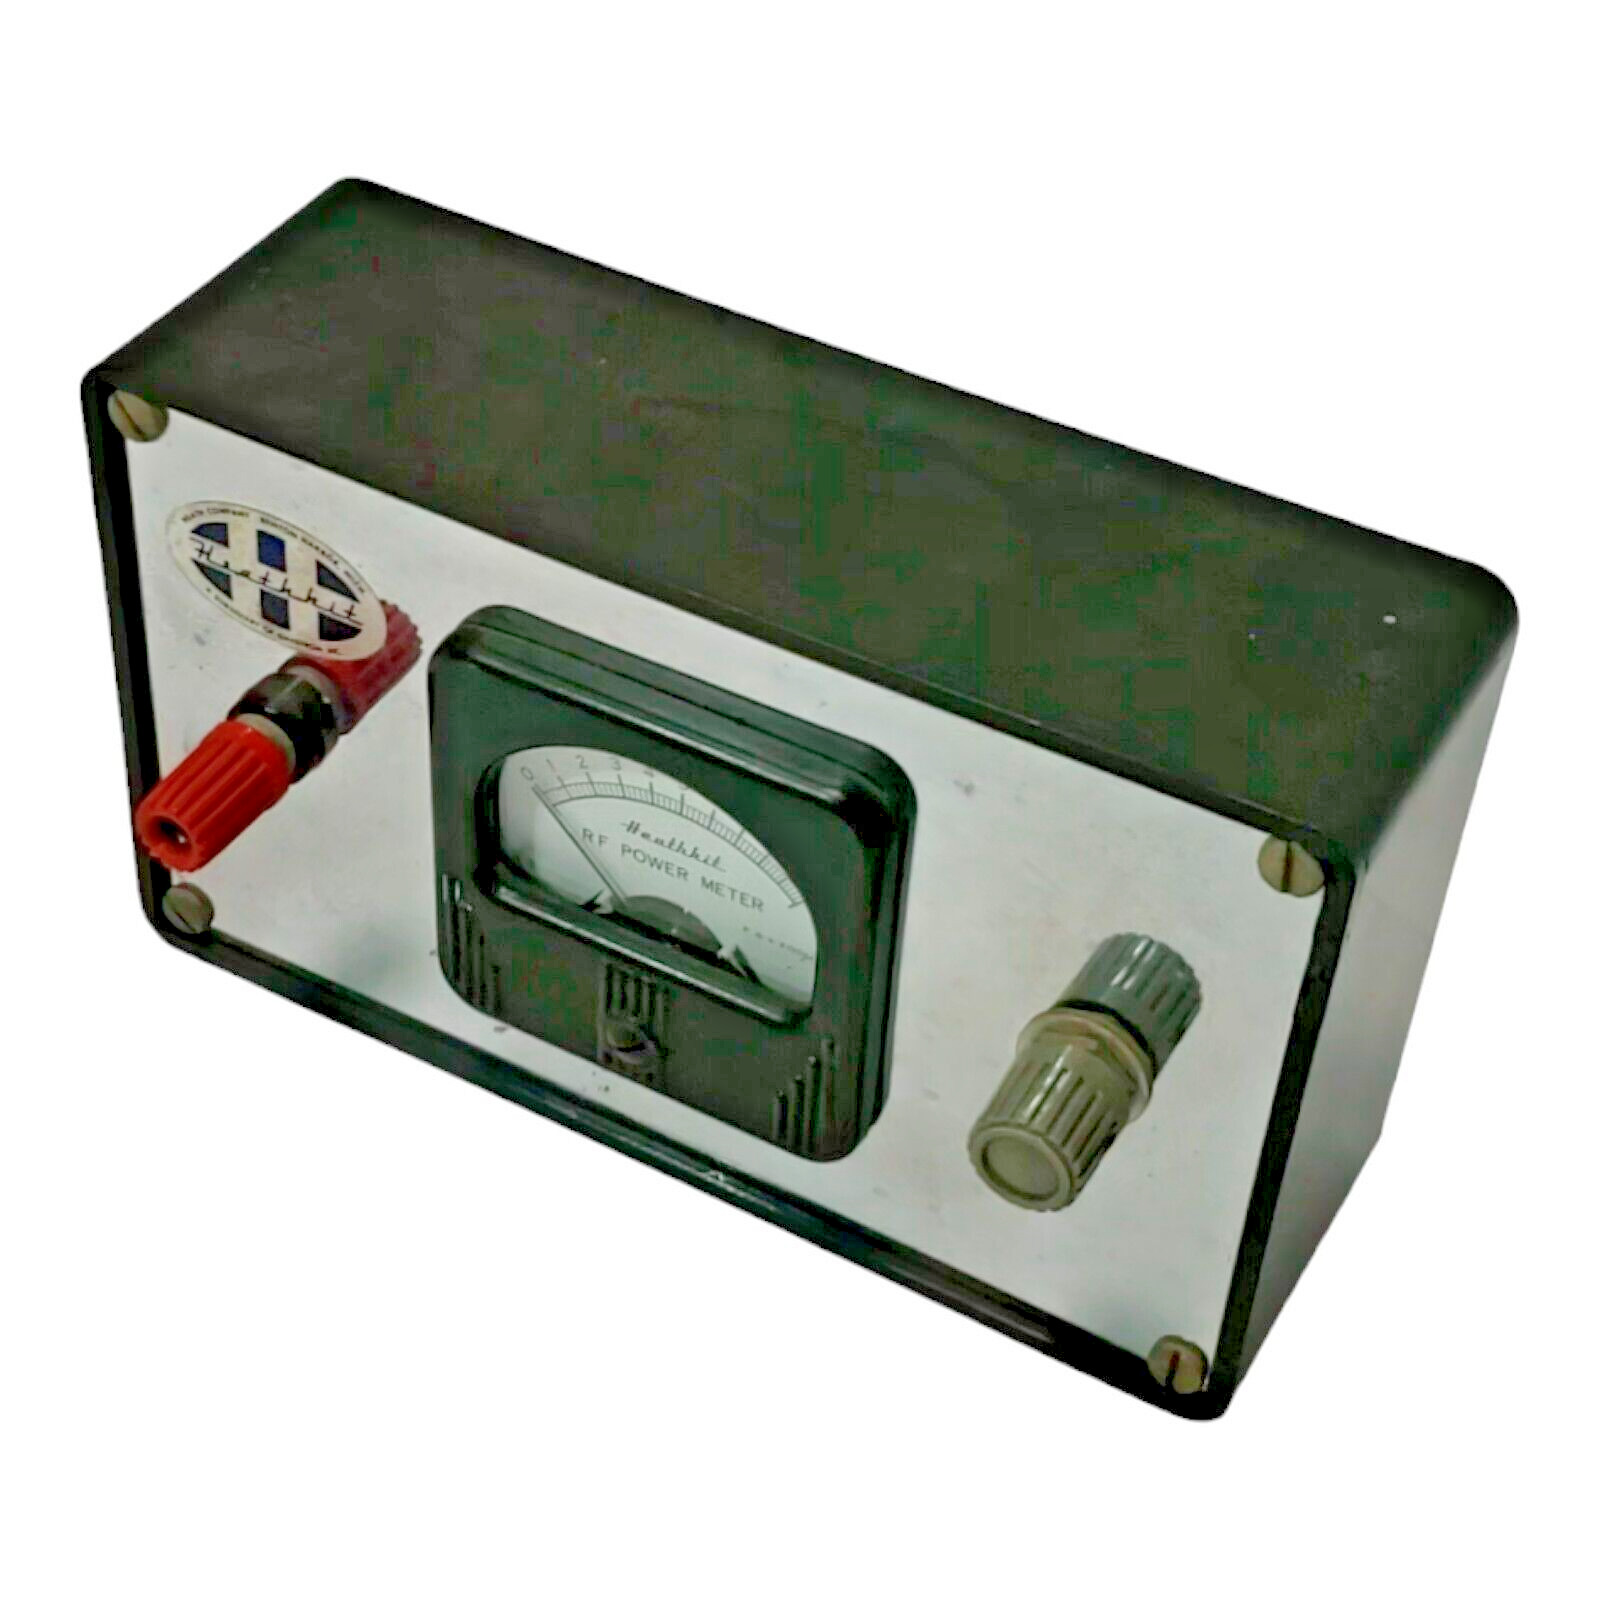 Rare Vintage Heathkit RF Power Meter High-Value Voltmeter - UNTESTED